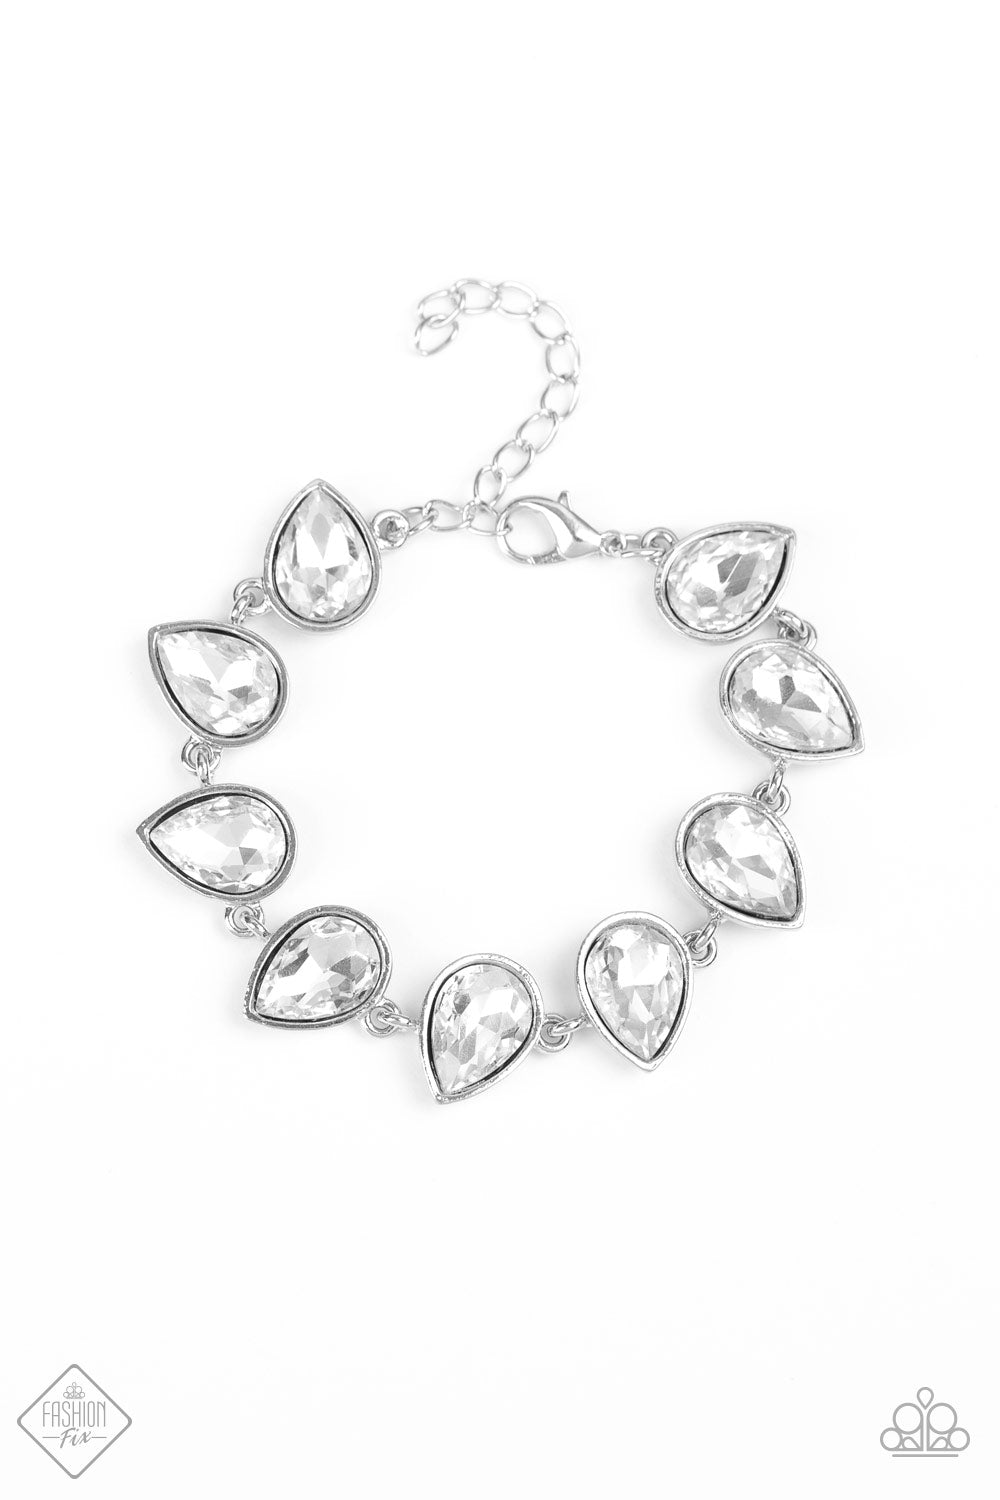 I Want It All - White gems necklace w/matching bracelet